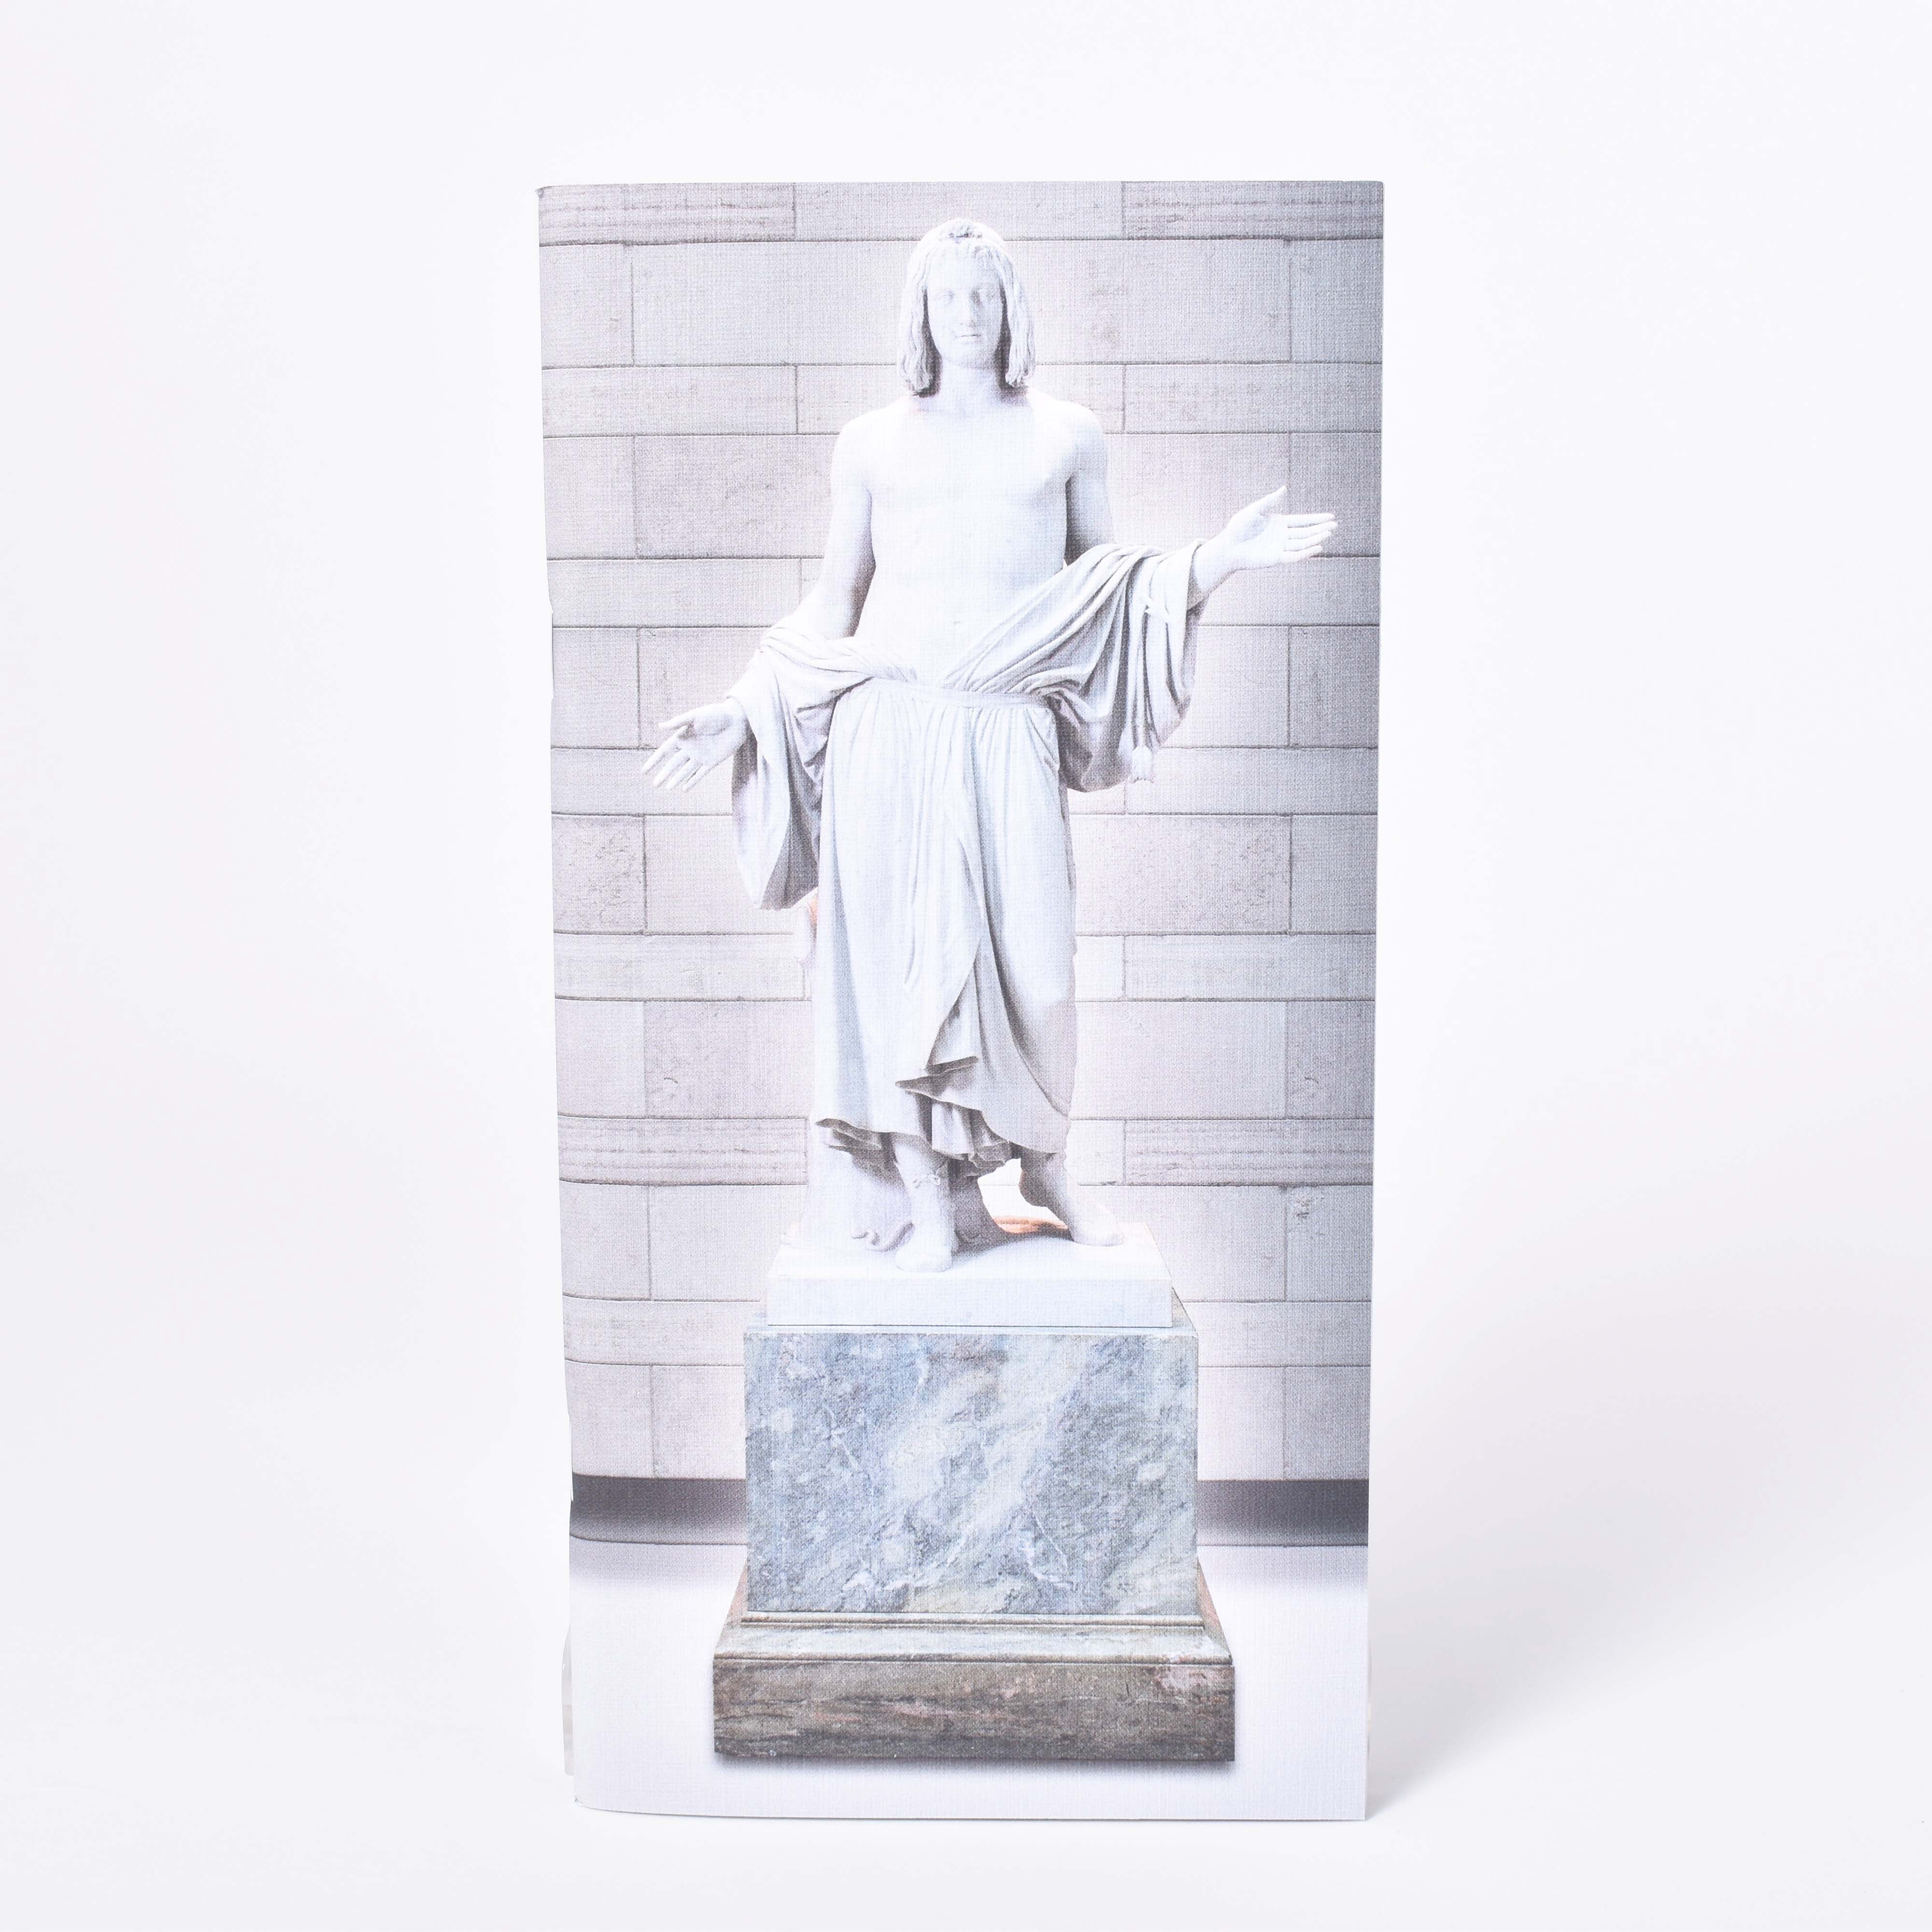 Långsmal anteckningshäfte med omslagsmotiv av Bengt Erland Fogelbergs skulptur Balder